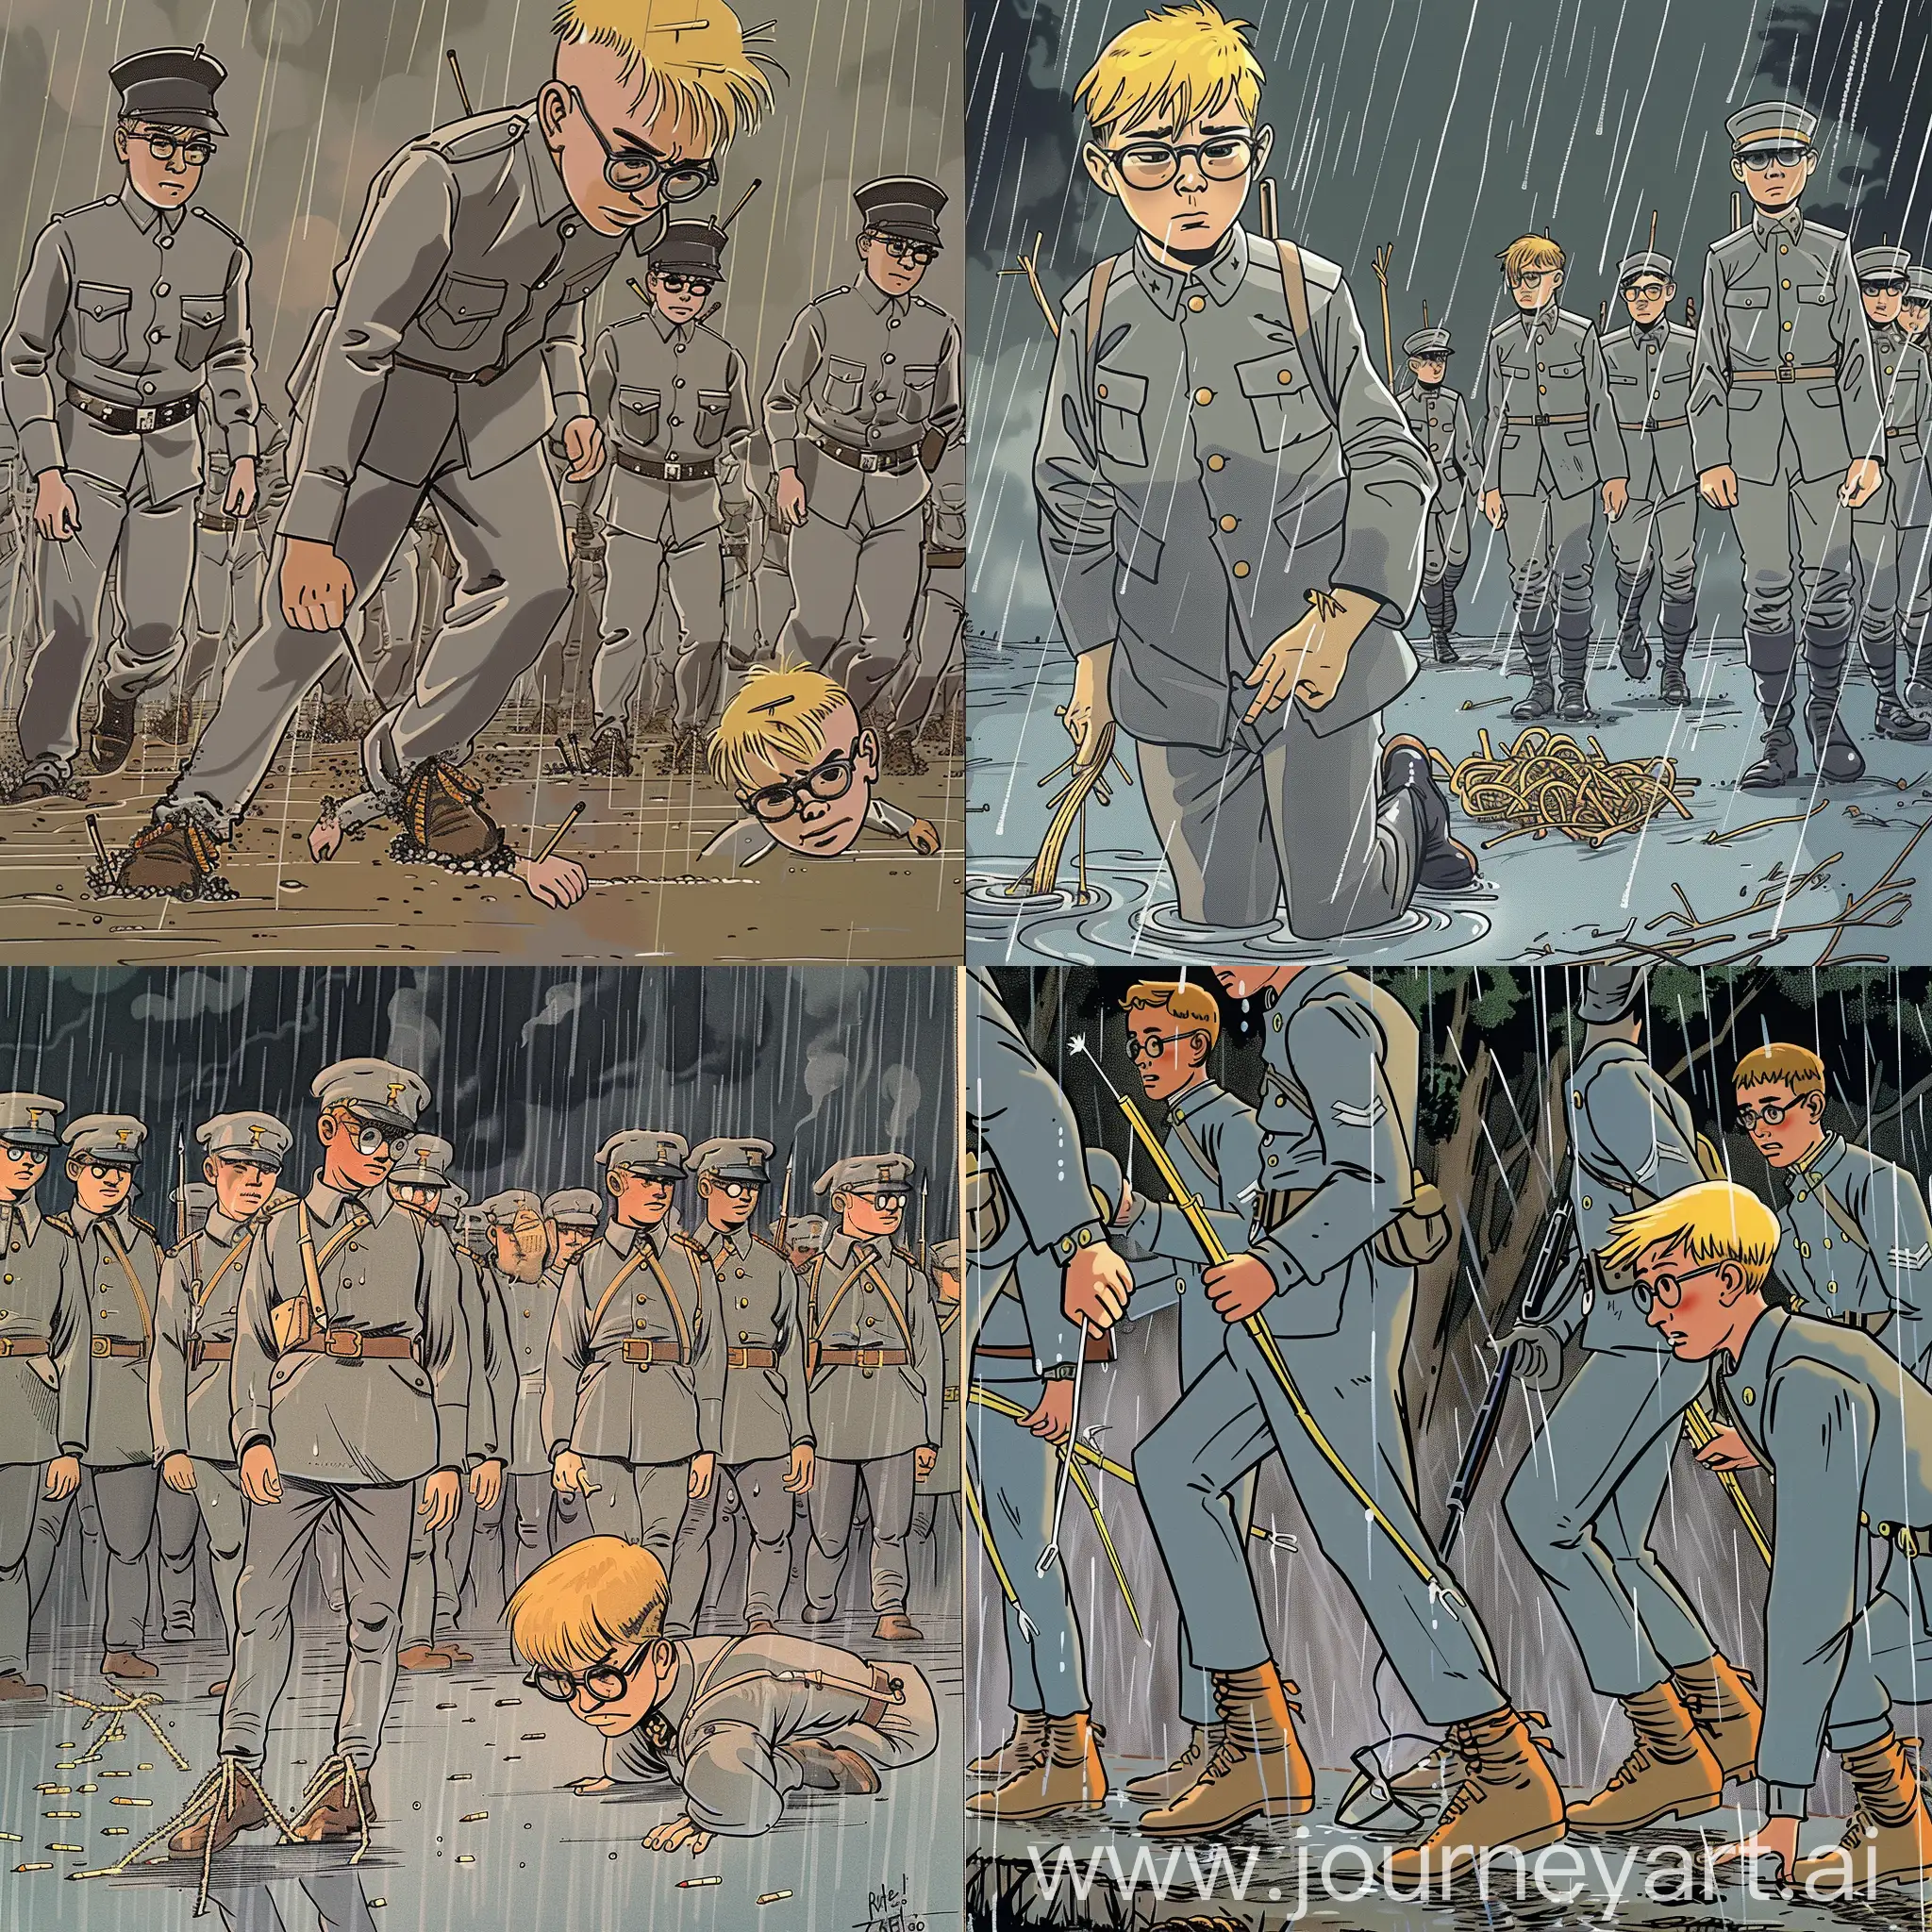 Rainy-March-of-GrayClad-Youth-American-Civil-War-Illustration